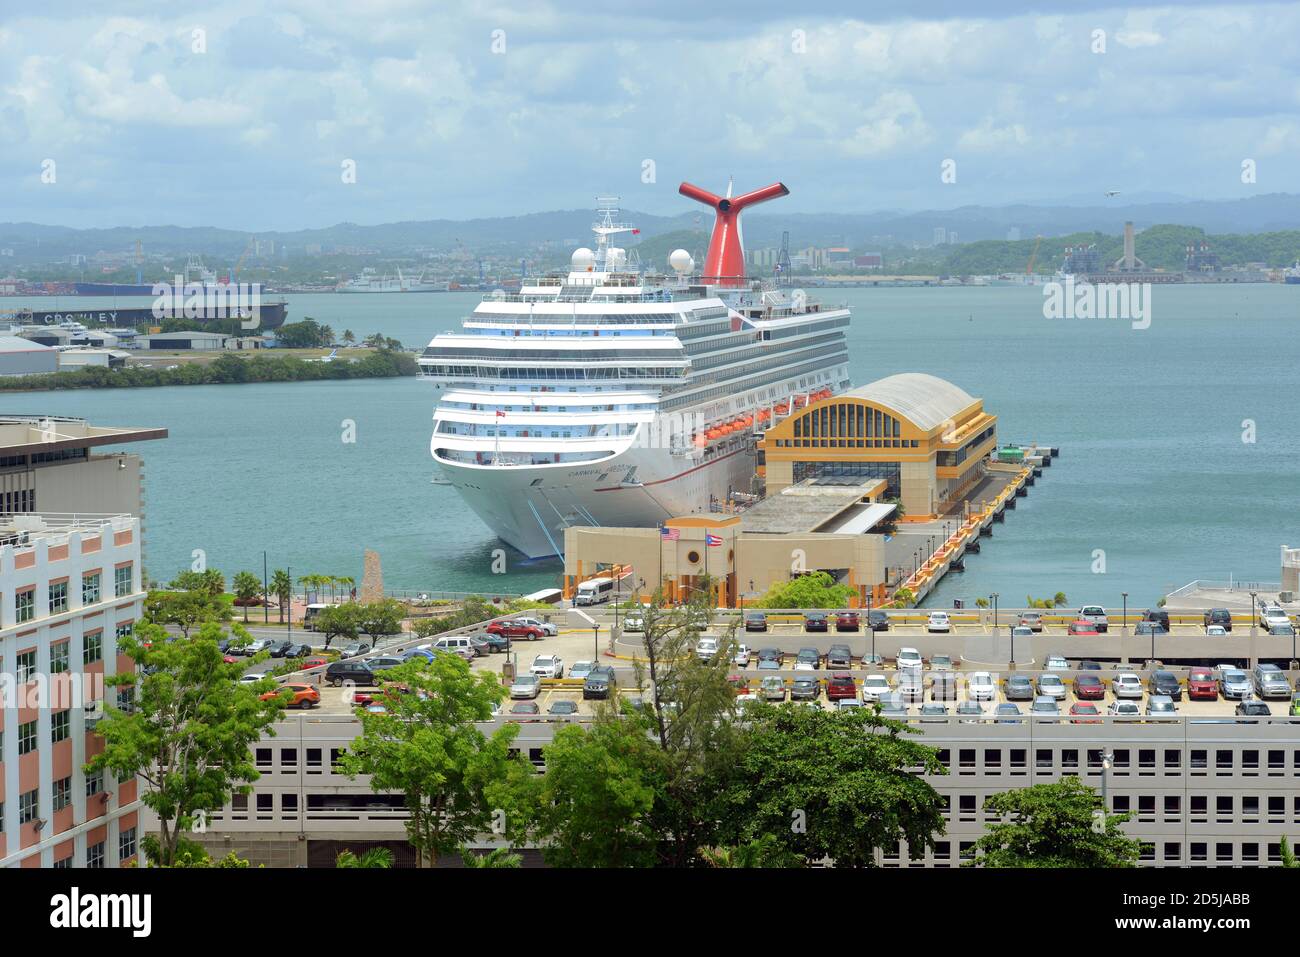 Carnival Freedom docked at Port of San Juan in Old San Juan, Puerto Rico. Stock Photo